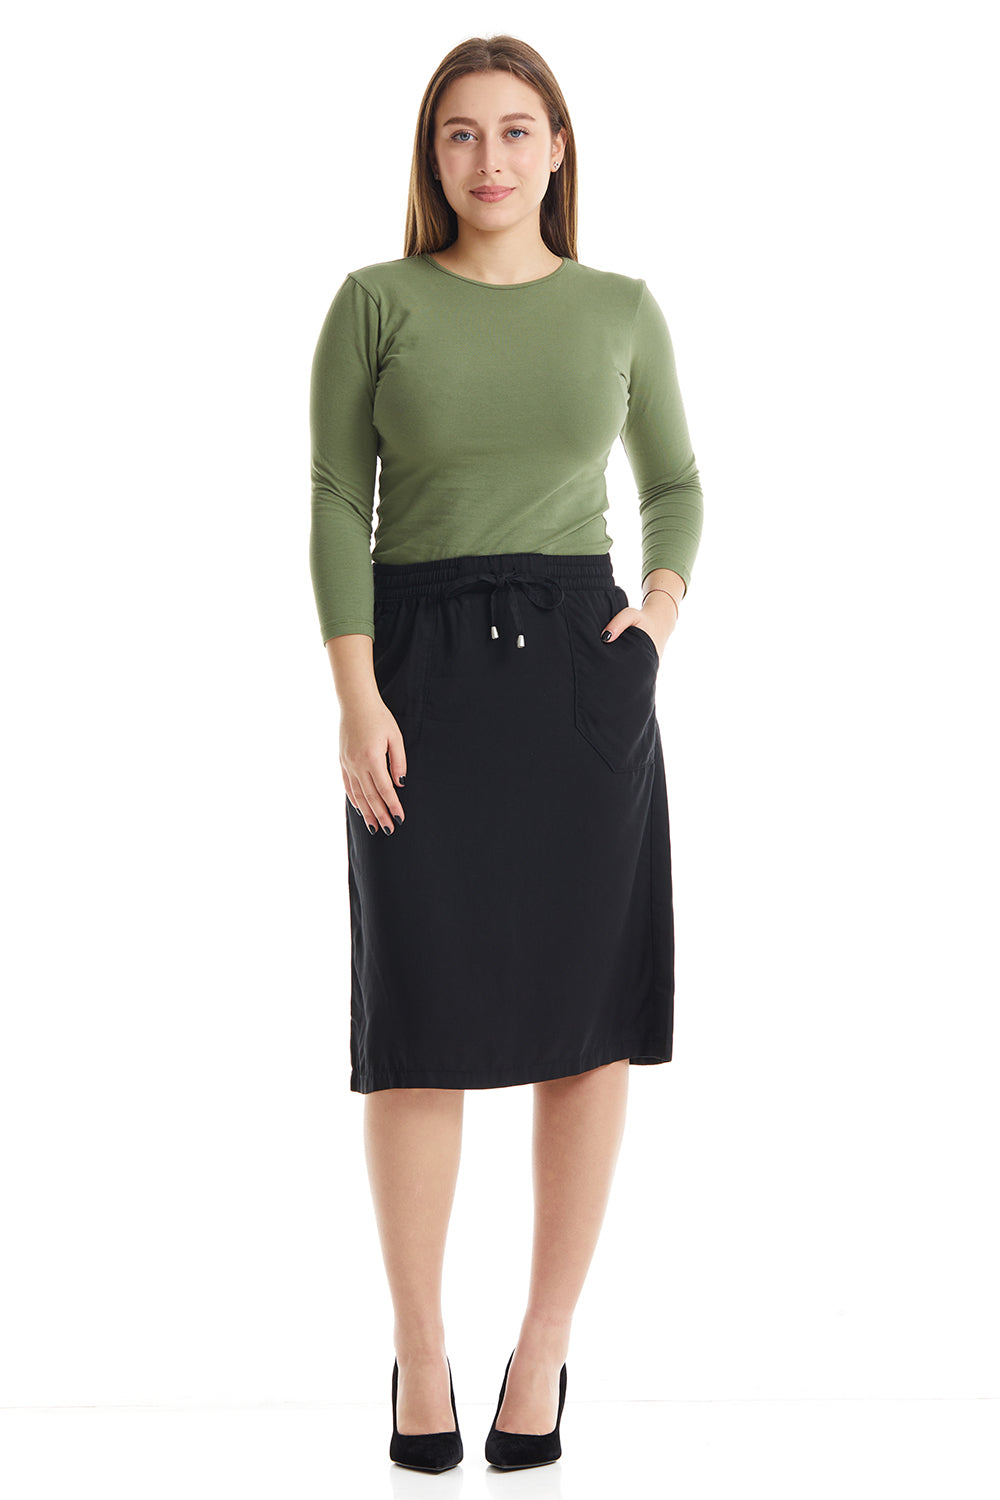 black skirt with slash pockets and an elastic drawstring waist